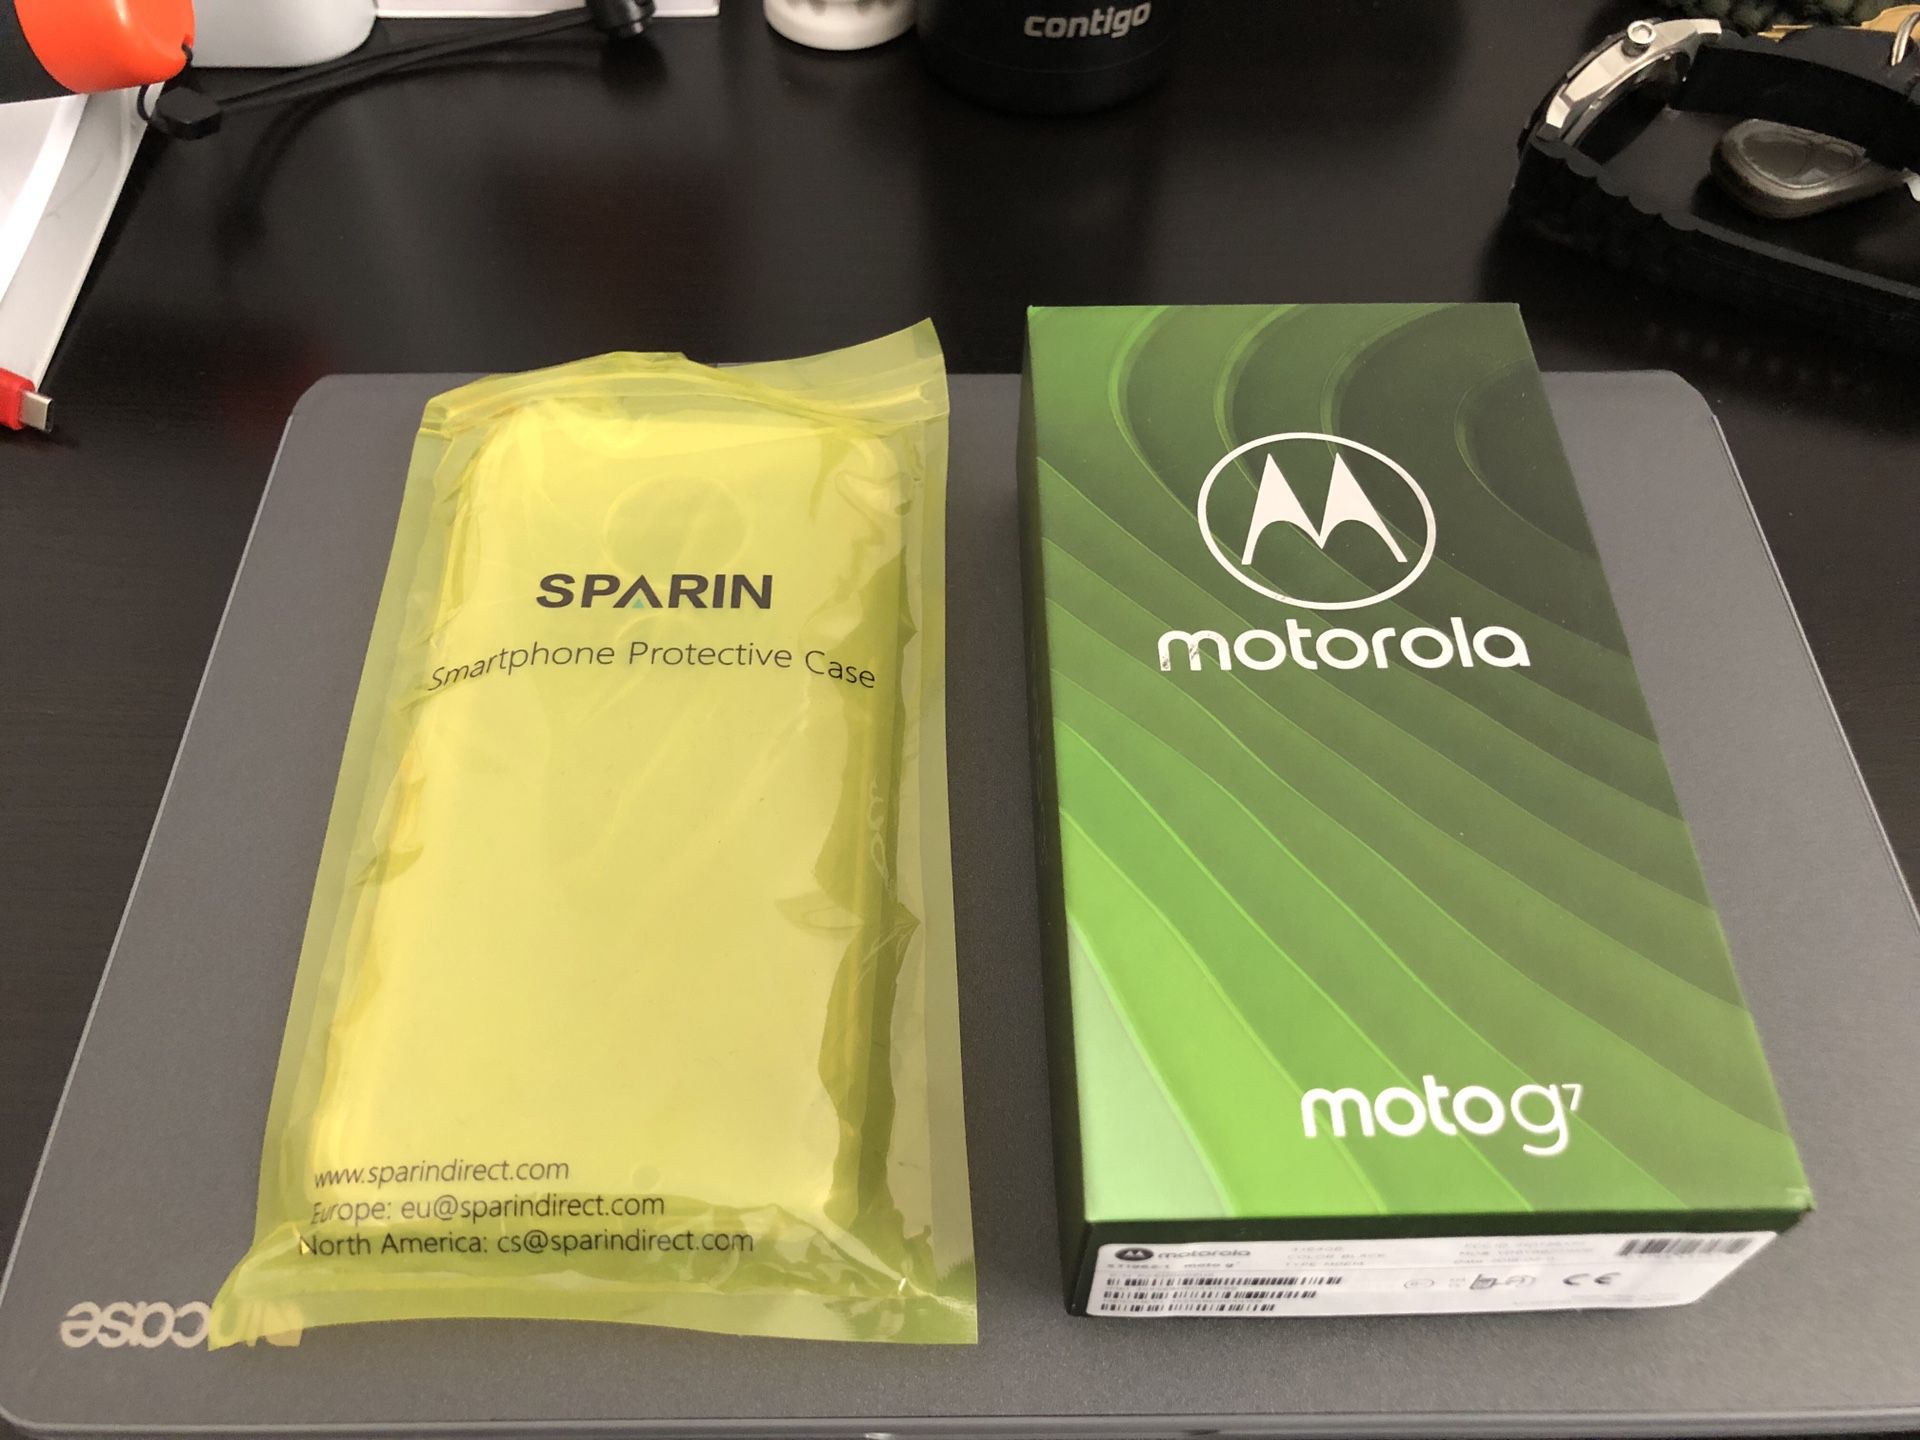 Motorola G7 Unlocked 64GB black brand new including free case with it!